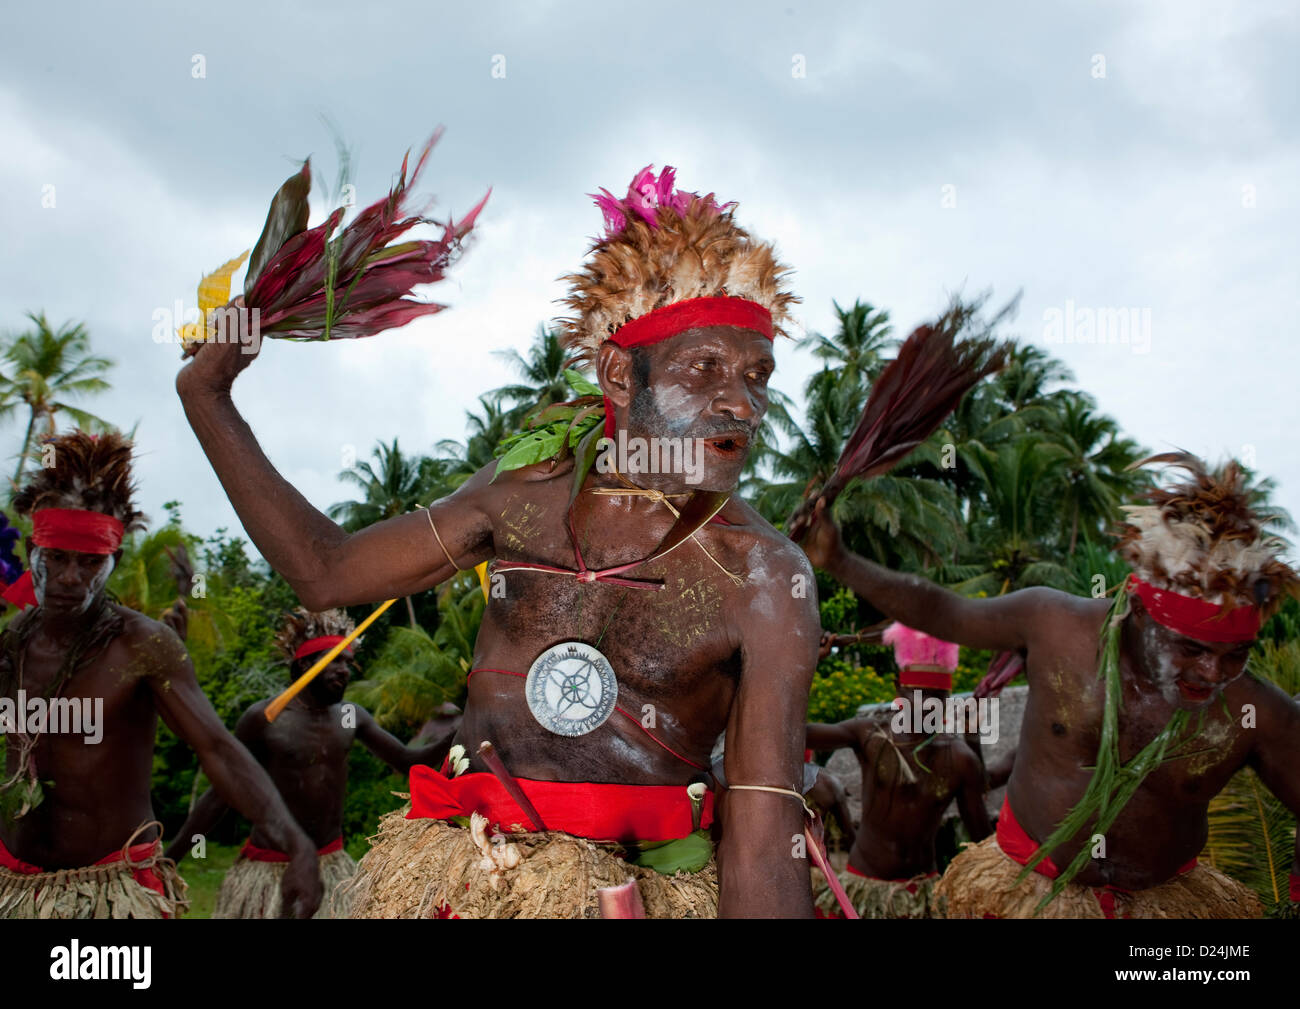 Männer aus Paplieng Stamm Tanz, neue Irland Insel Kavieng, Papua Neu Guinea Stockfoto